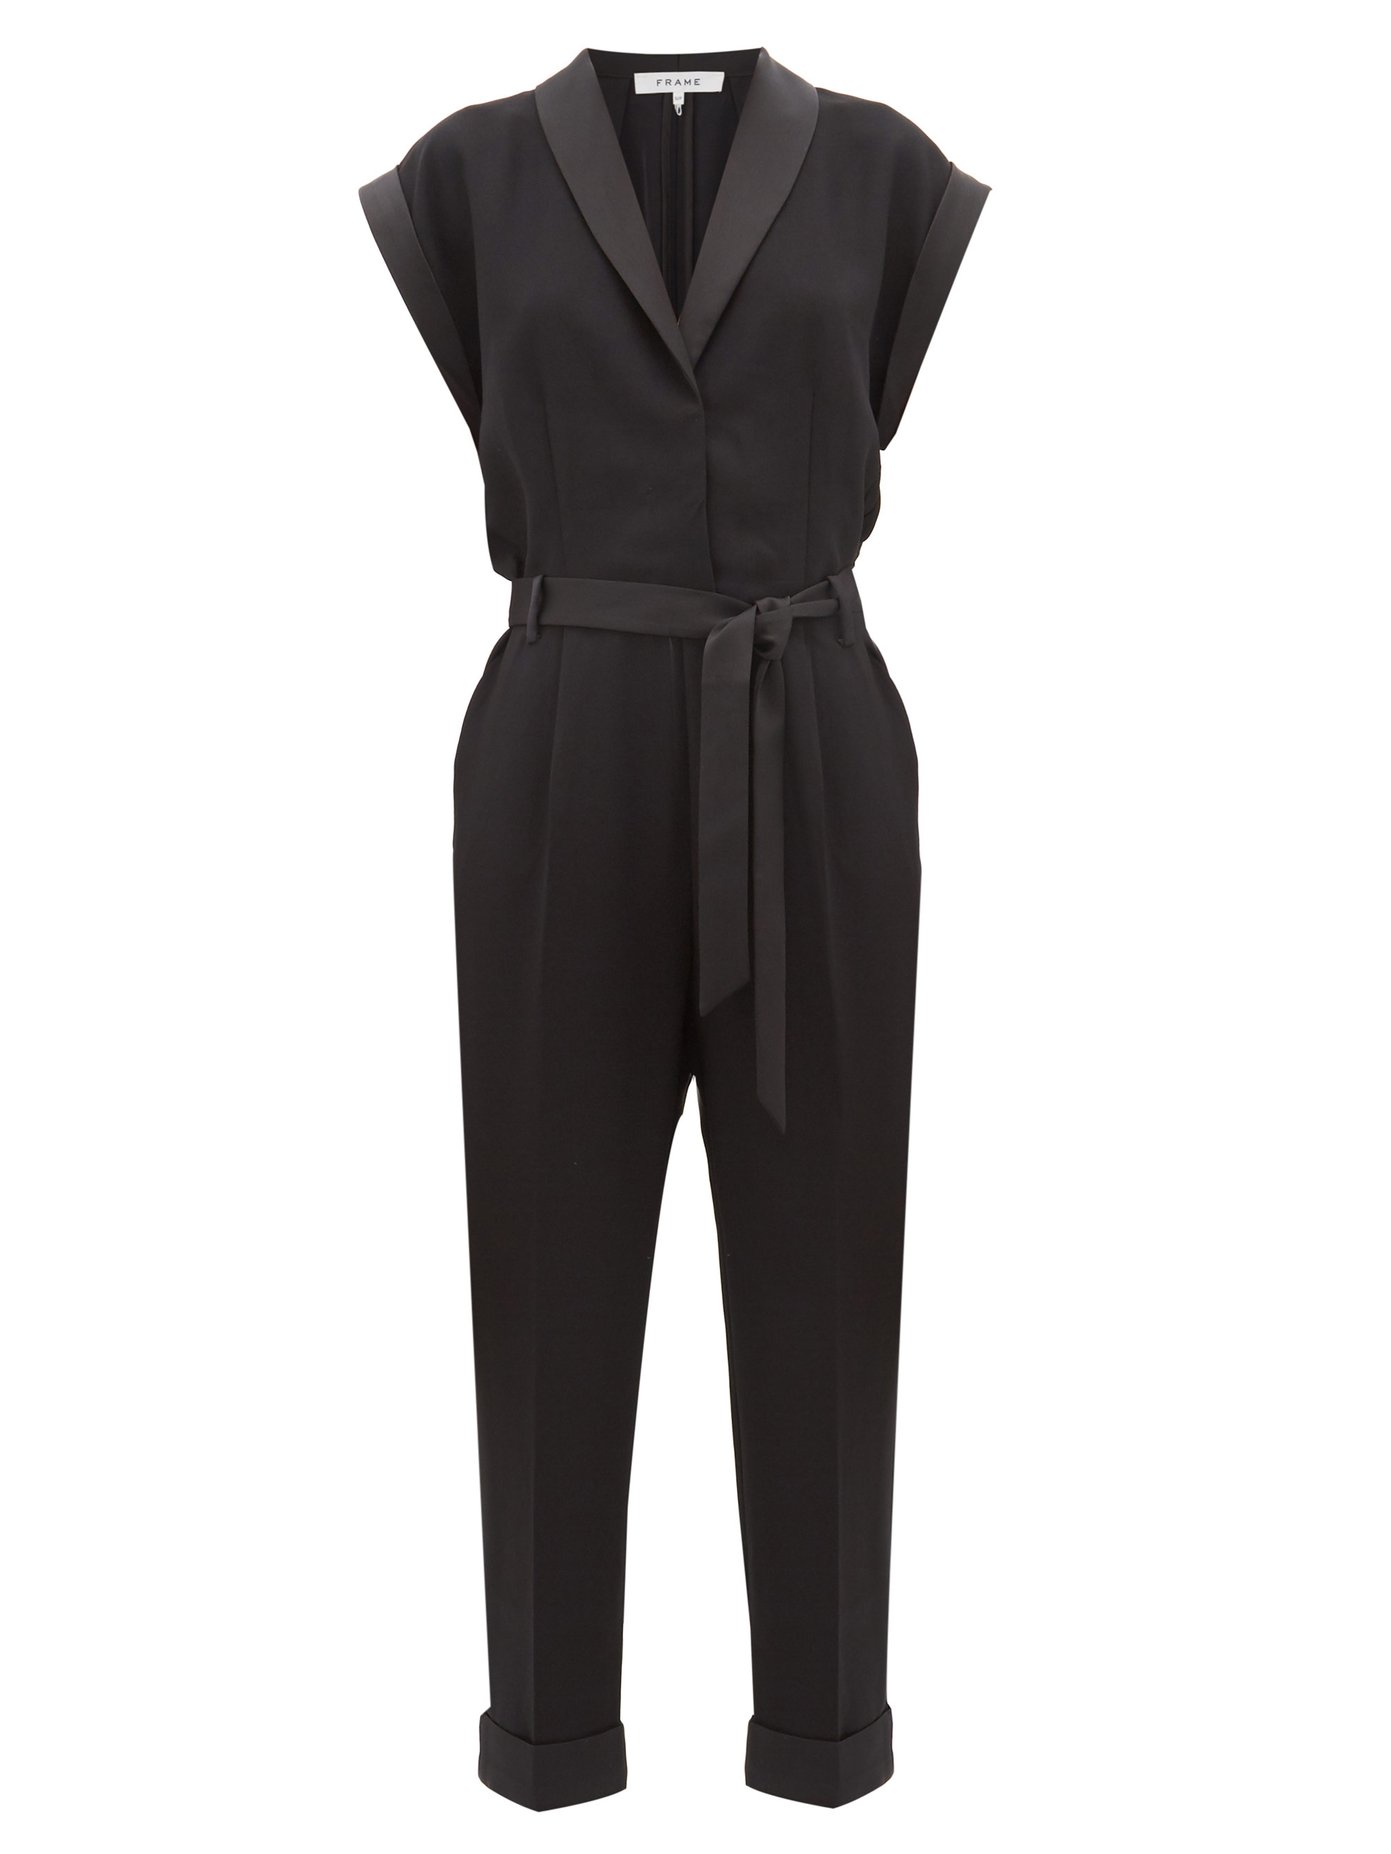 tuxedo jumpsuit uk